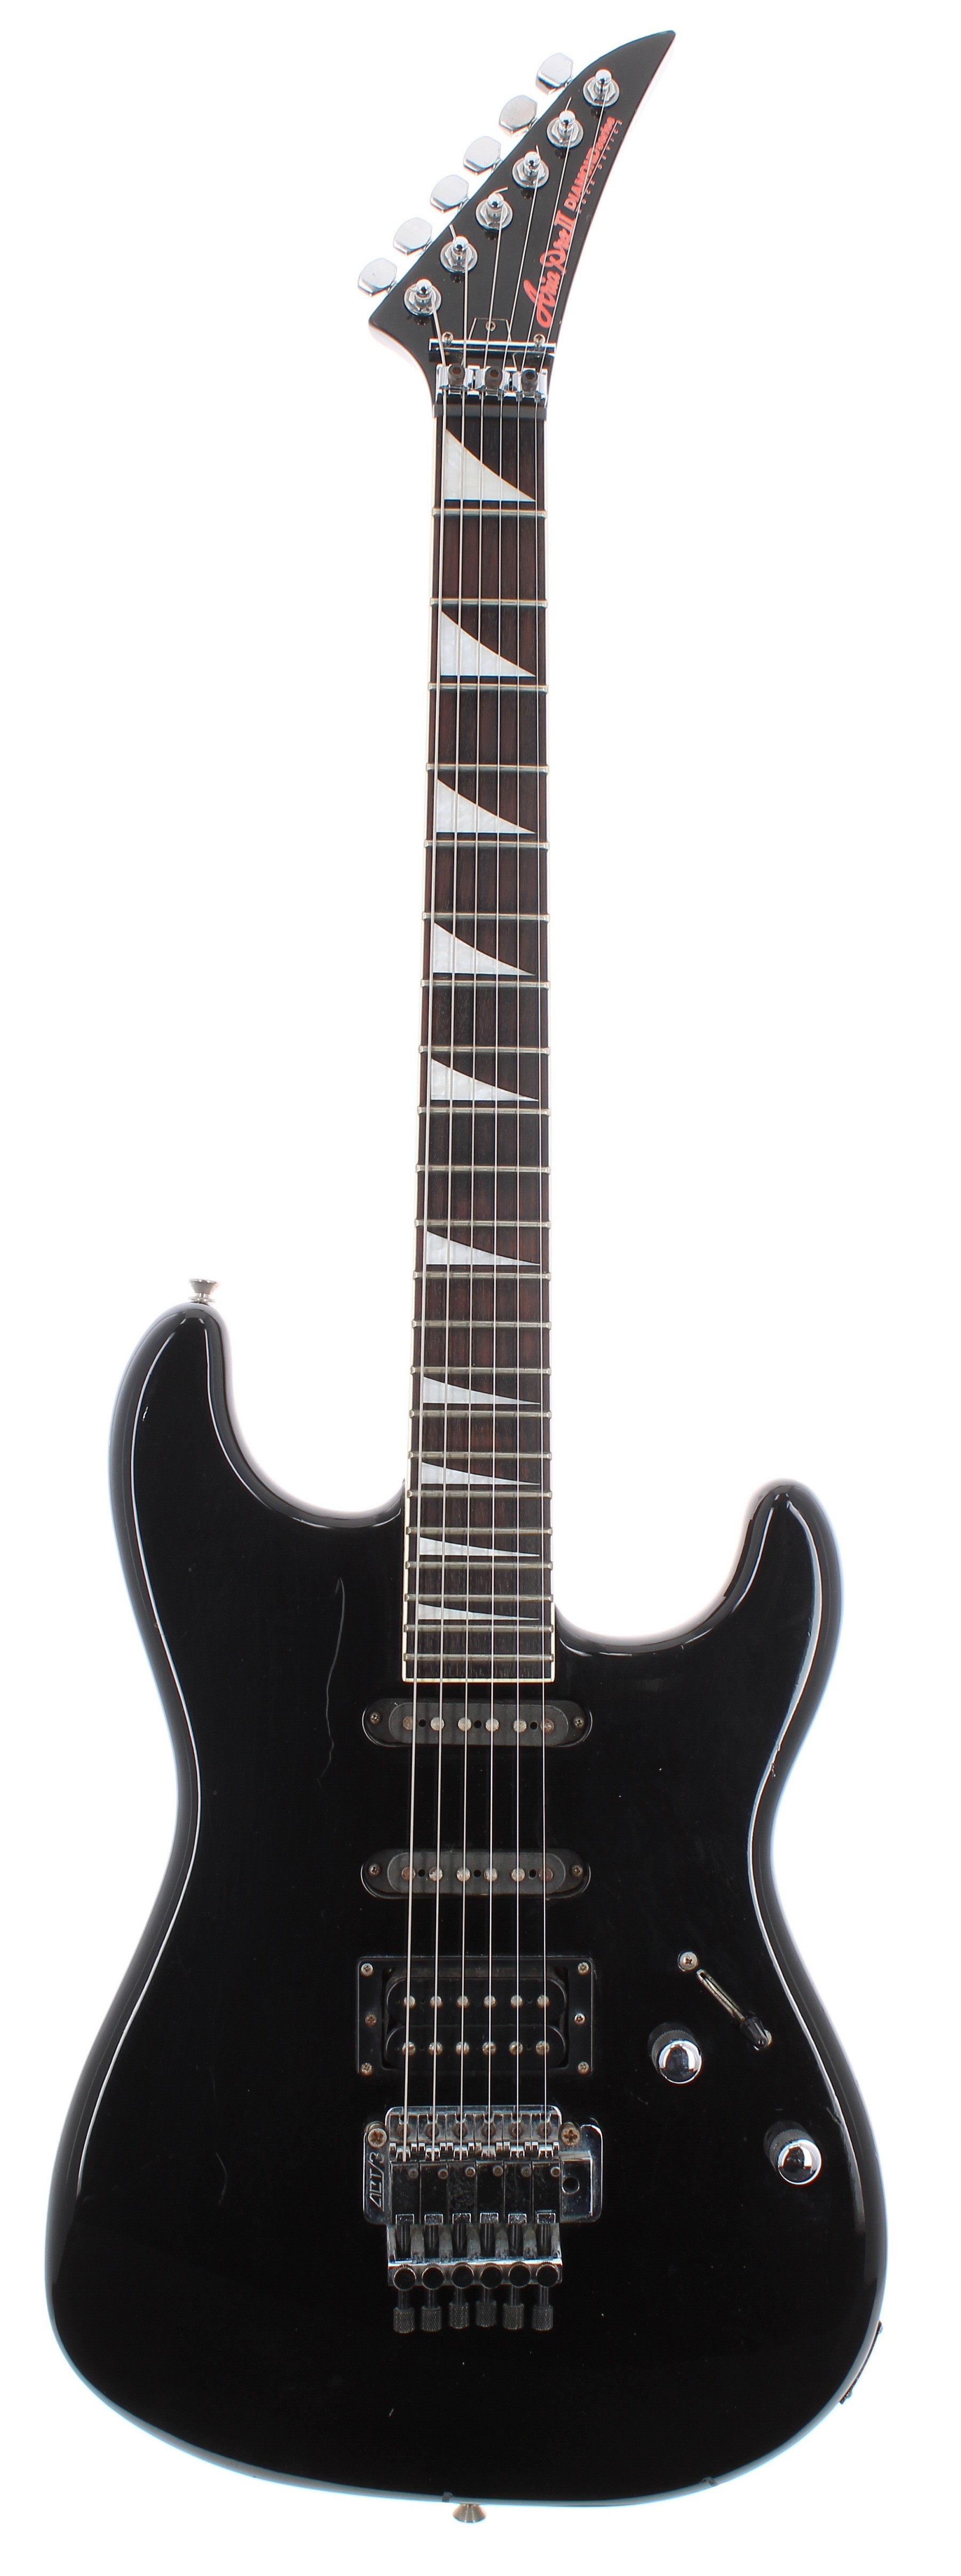 1980s Aria Pro II Diamond Series electric guitar, made in Japan